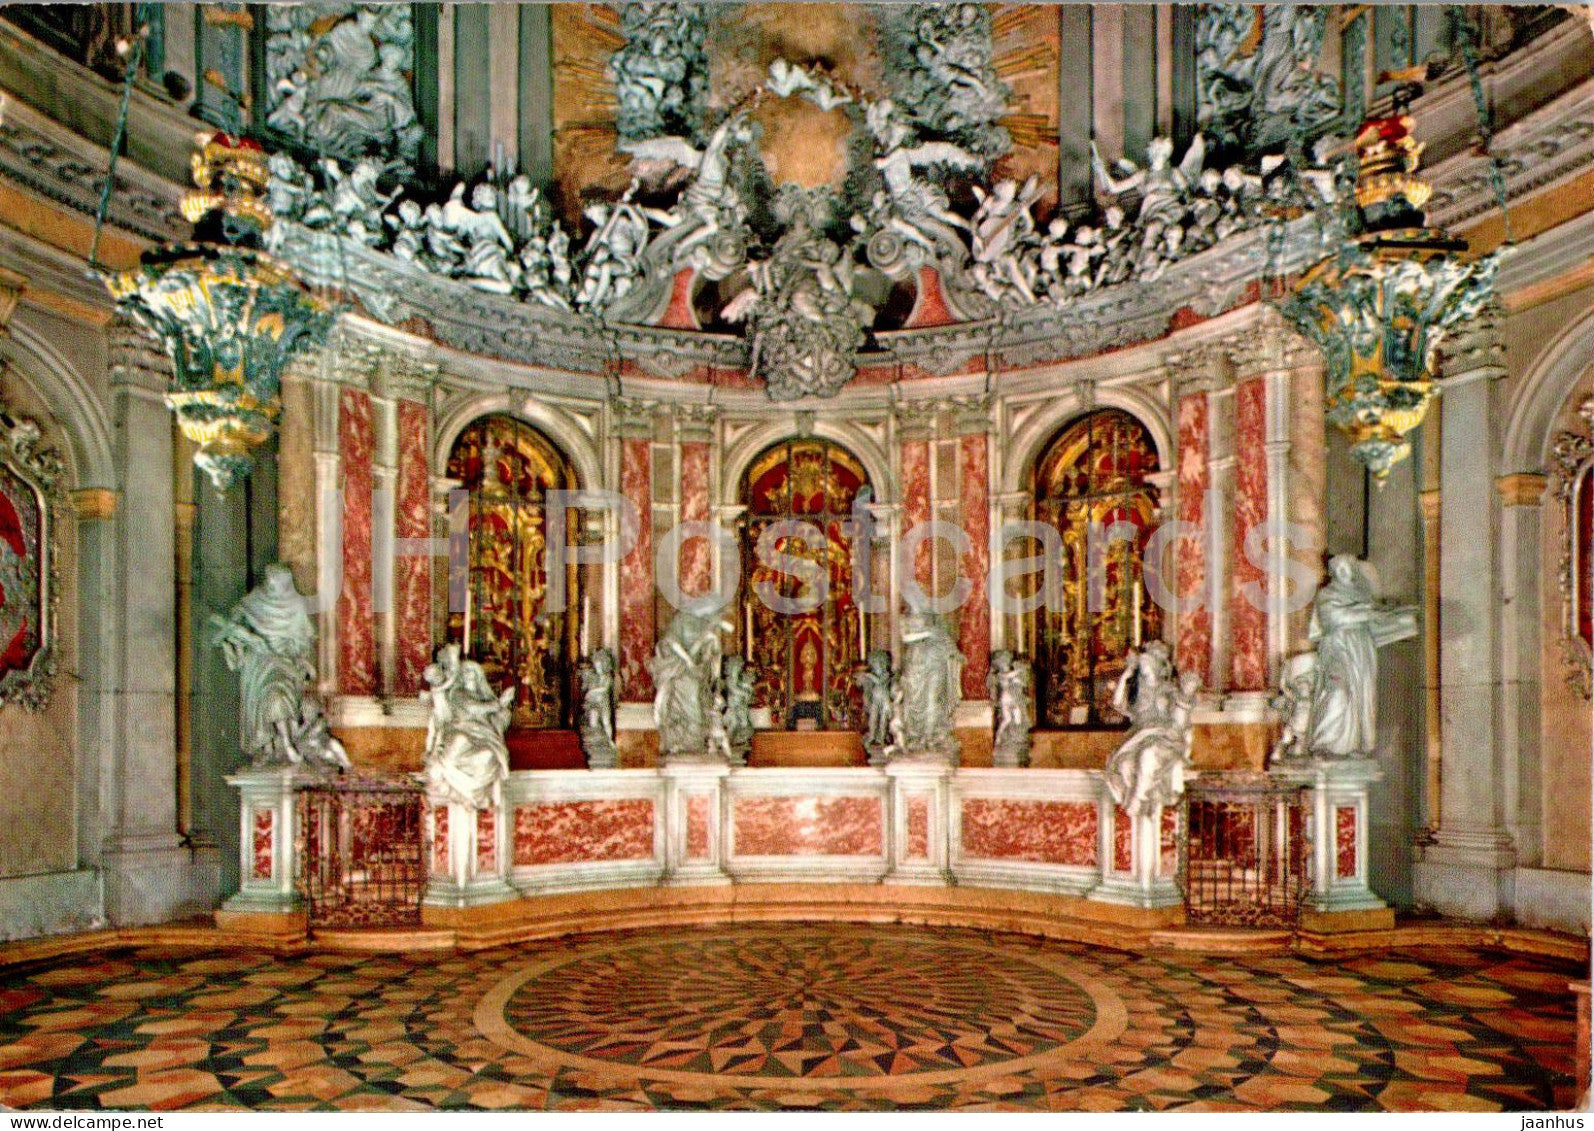 Padova - Basilica del Santo - La Cappella del Tesoro - Basilica of St Anthony  - The Chapel - 24 - 1982 - Italy - used - JH Postcards